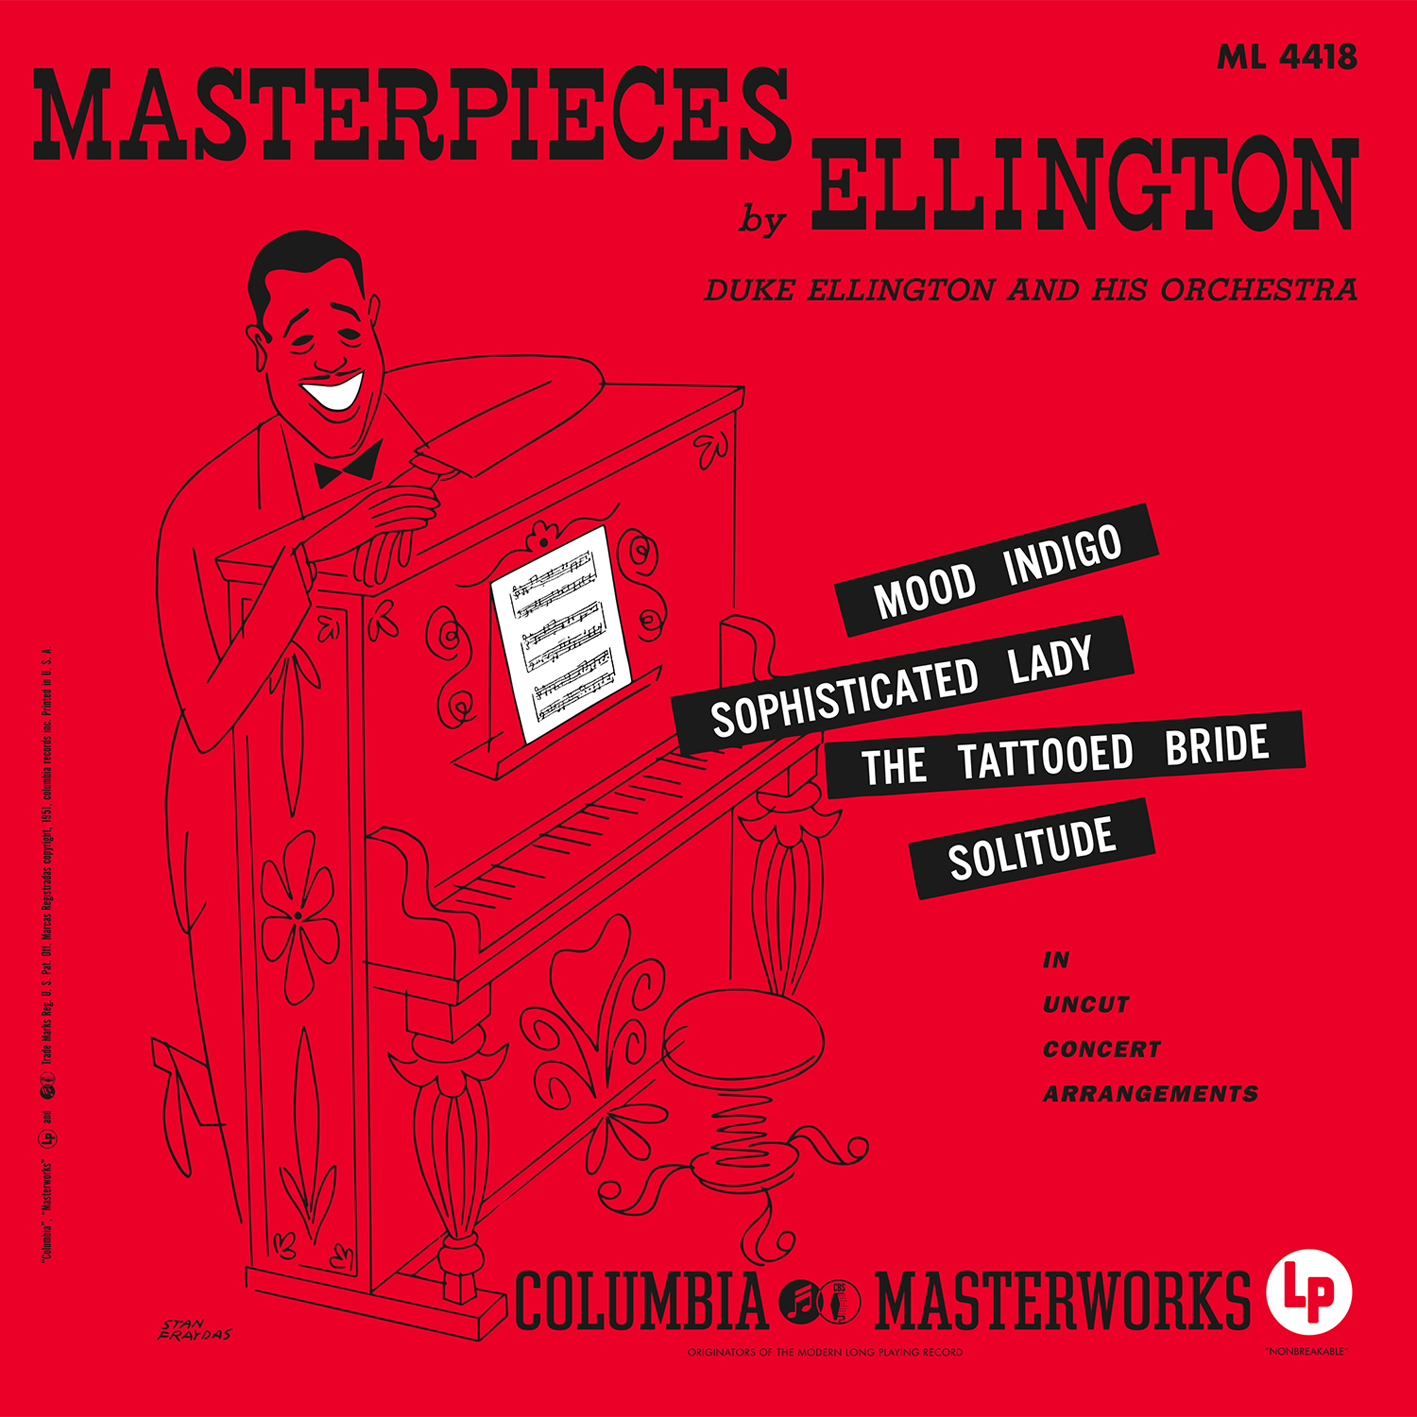 Duke Ellington & His Orchestra - Masterpieces by Ellington (1951) [Analogue Productions 2014] SACD ISO + DSF DSD64 + FLAC 24bit/96kHz